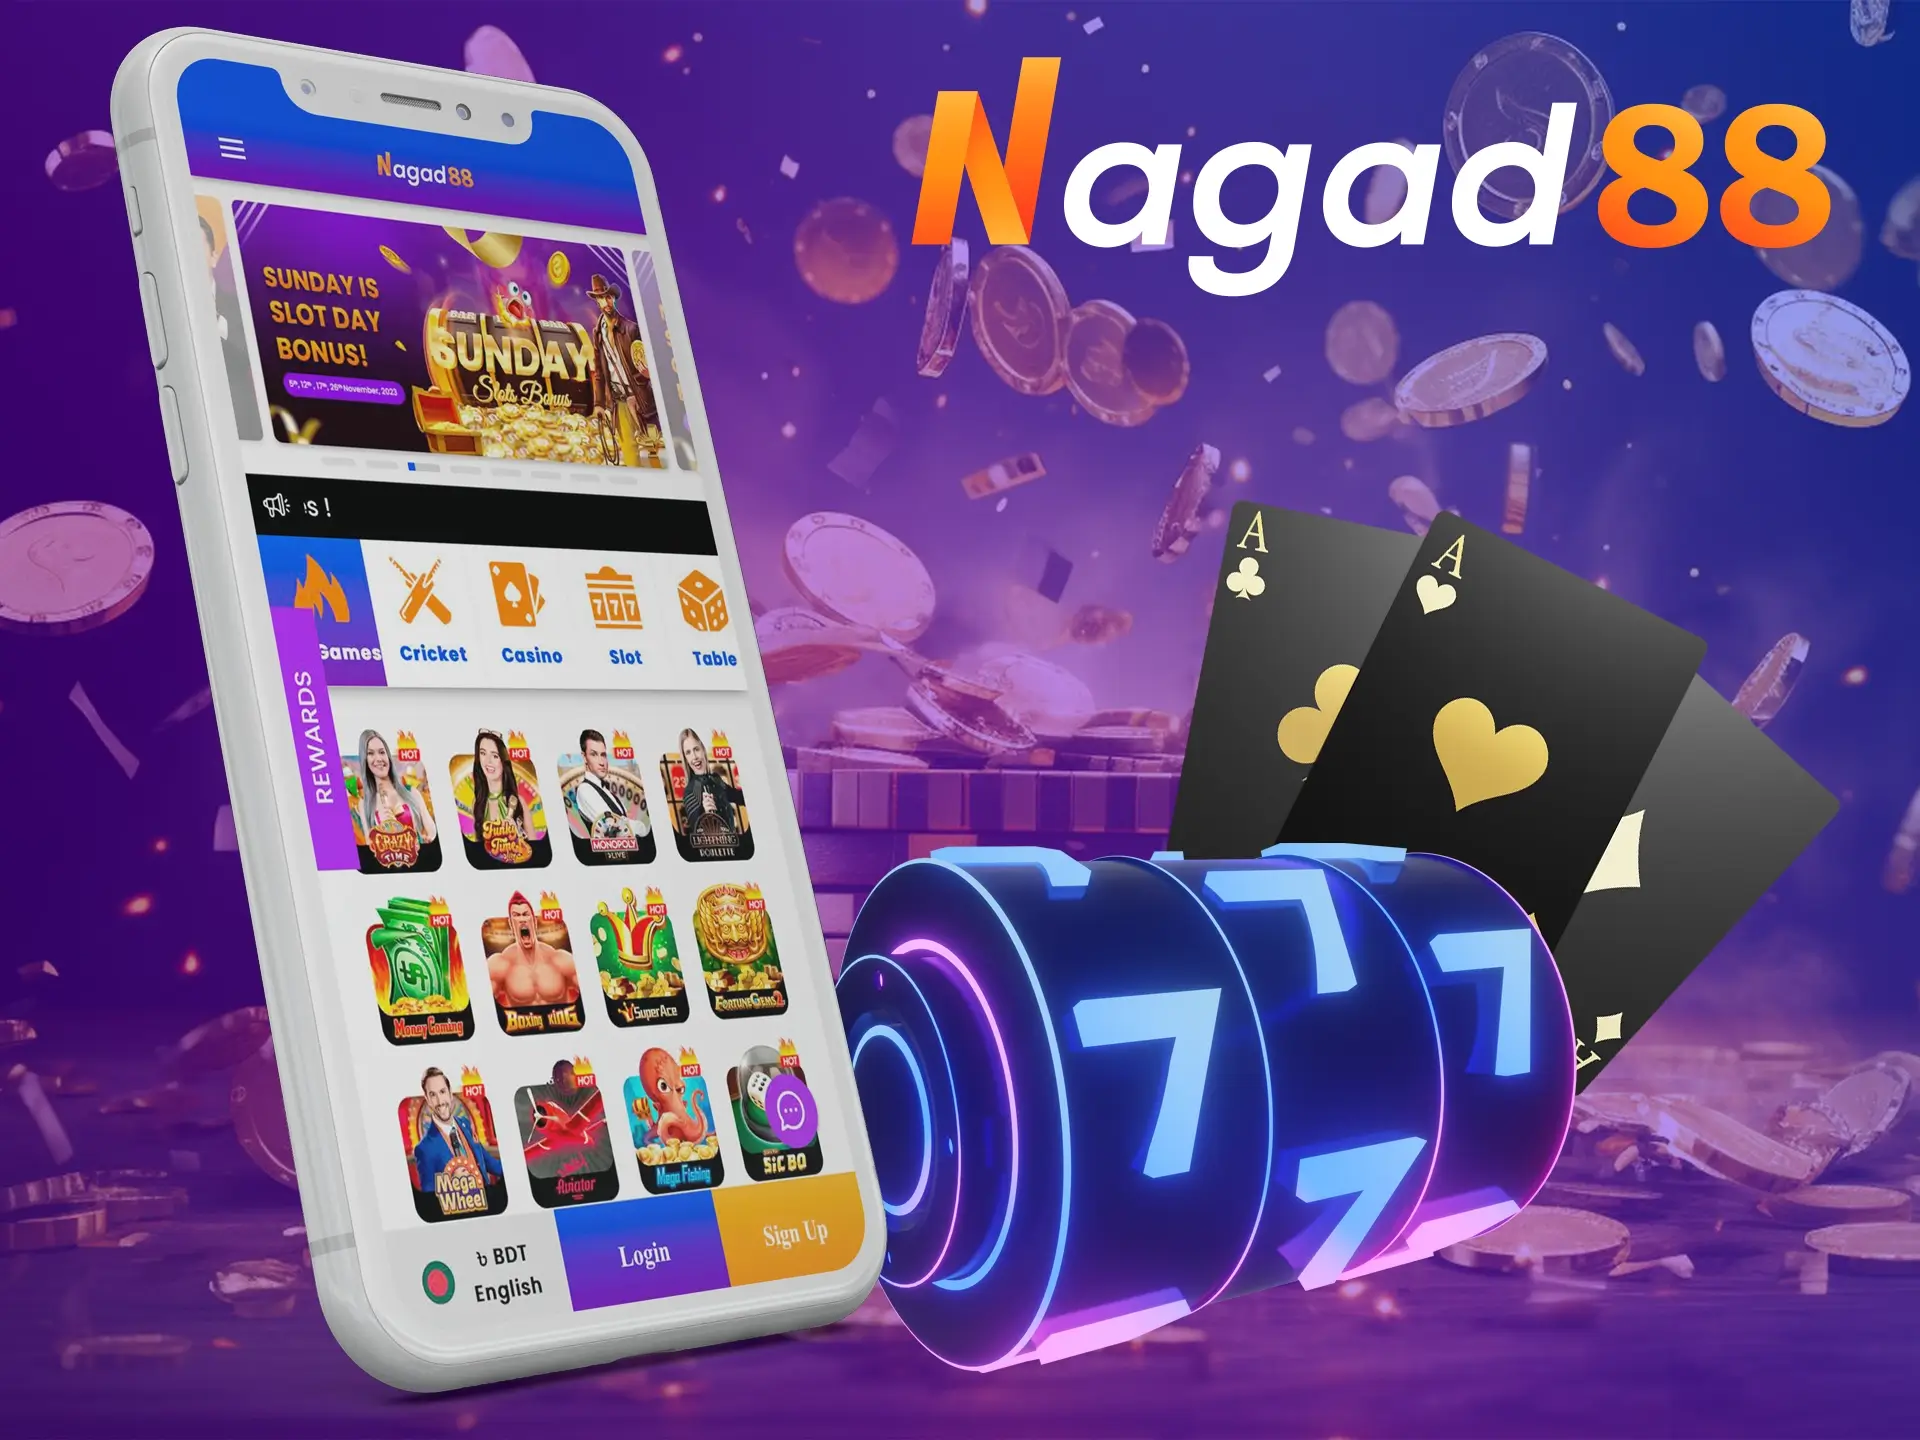 Note the variety of games at Nagad88 casino.